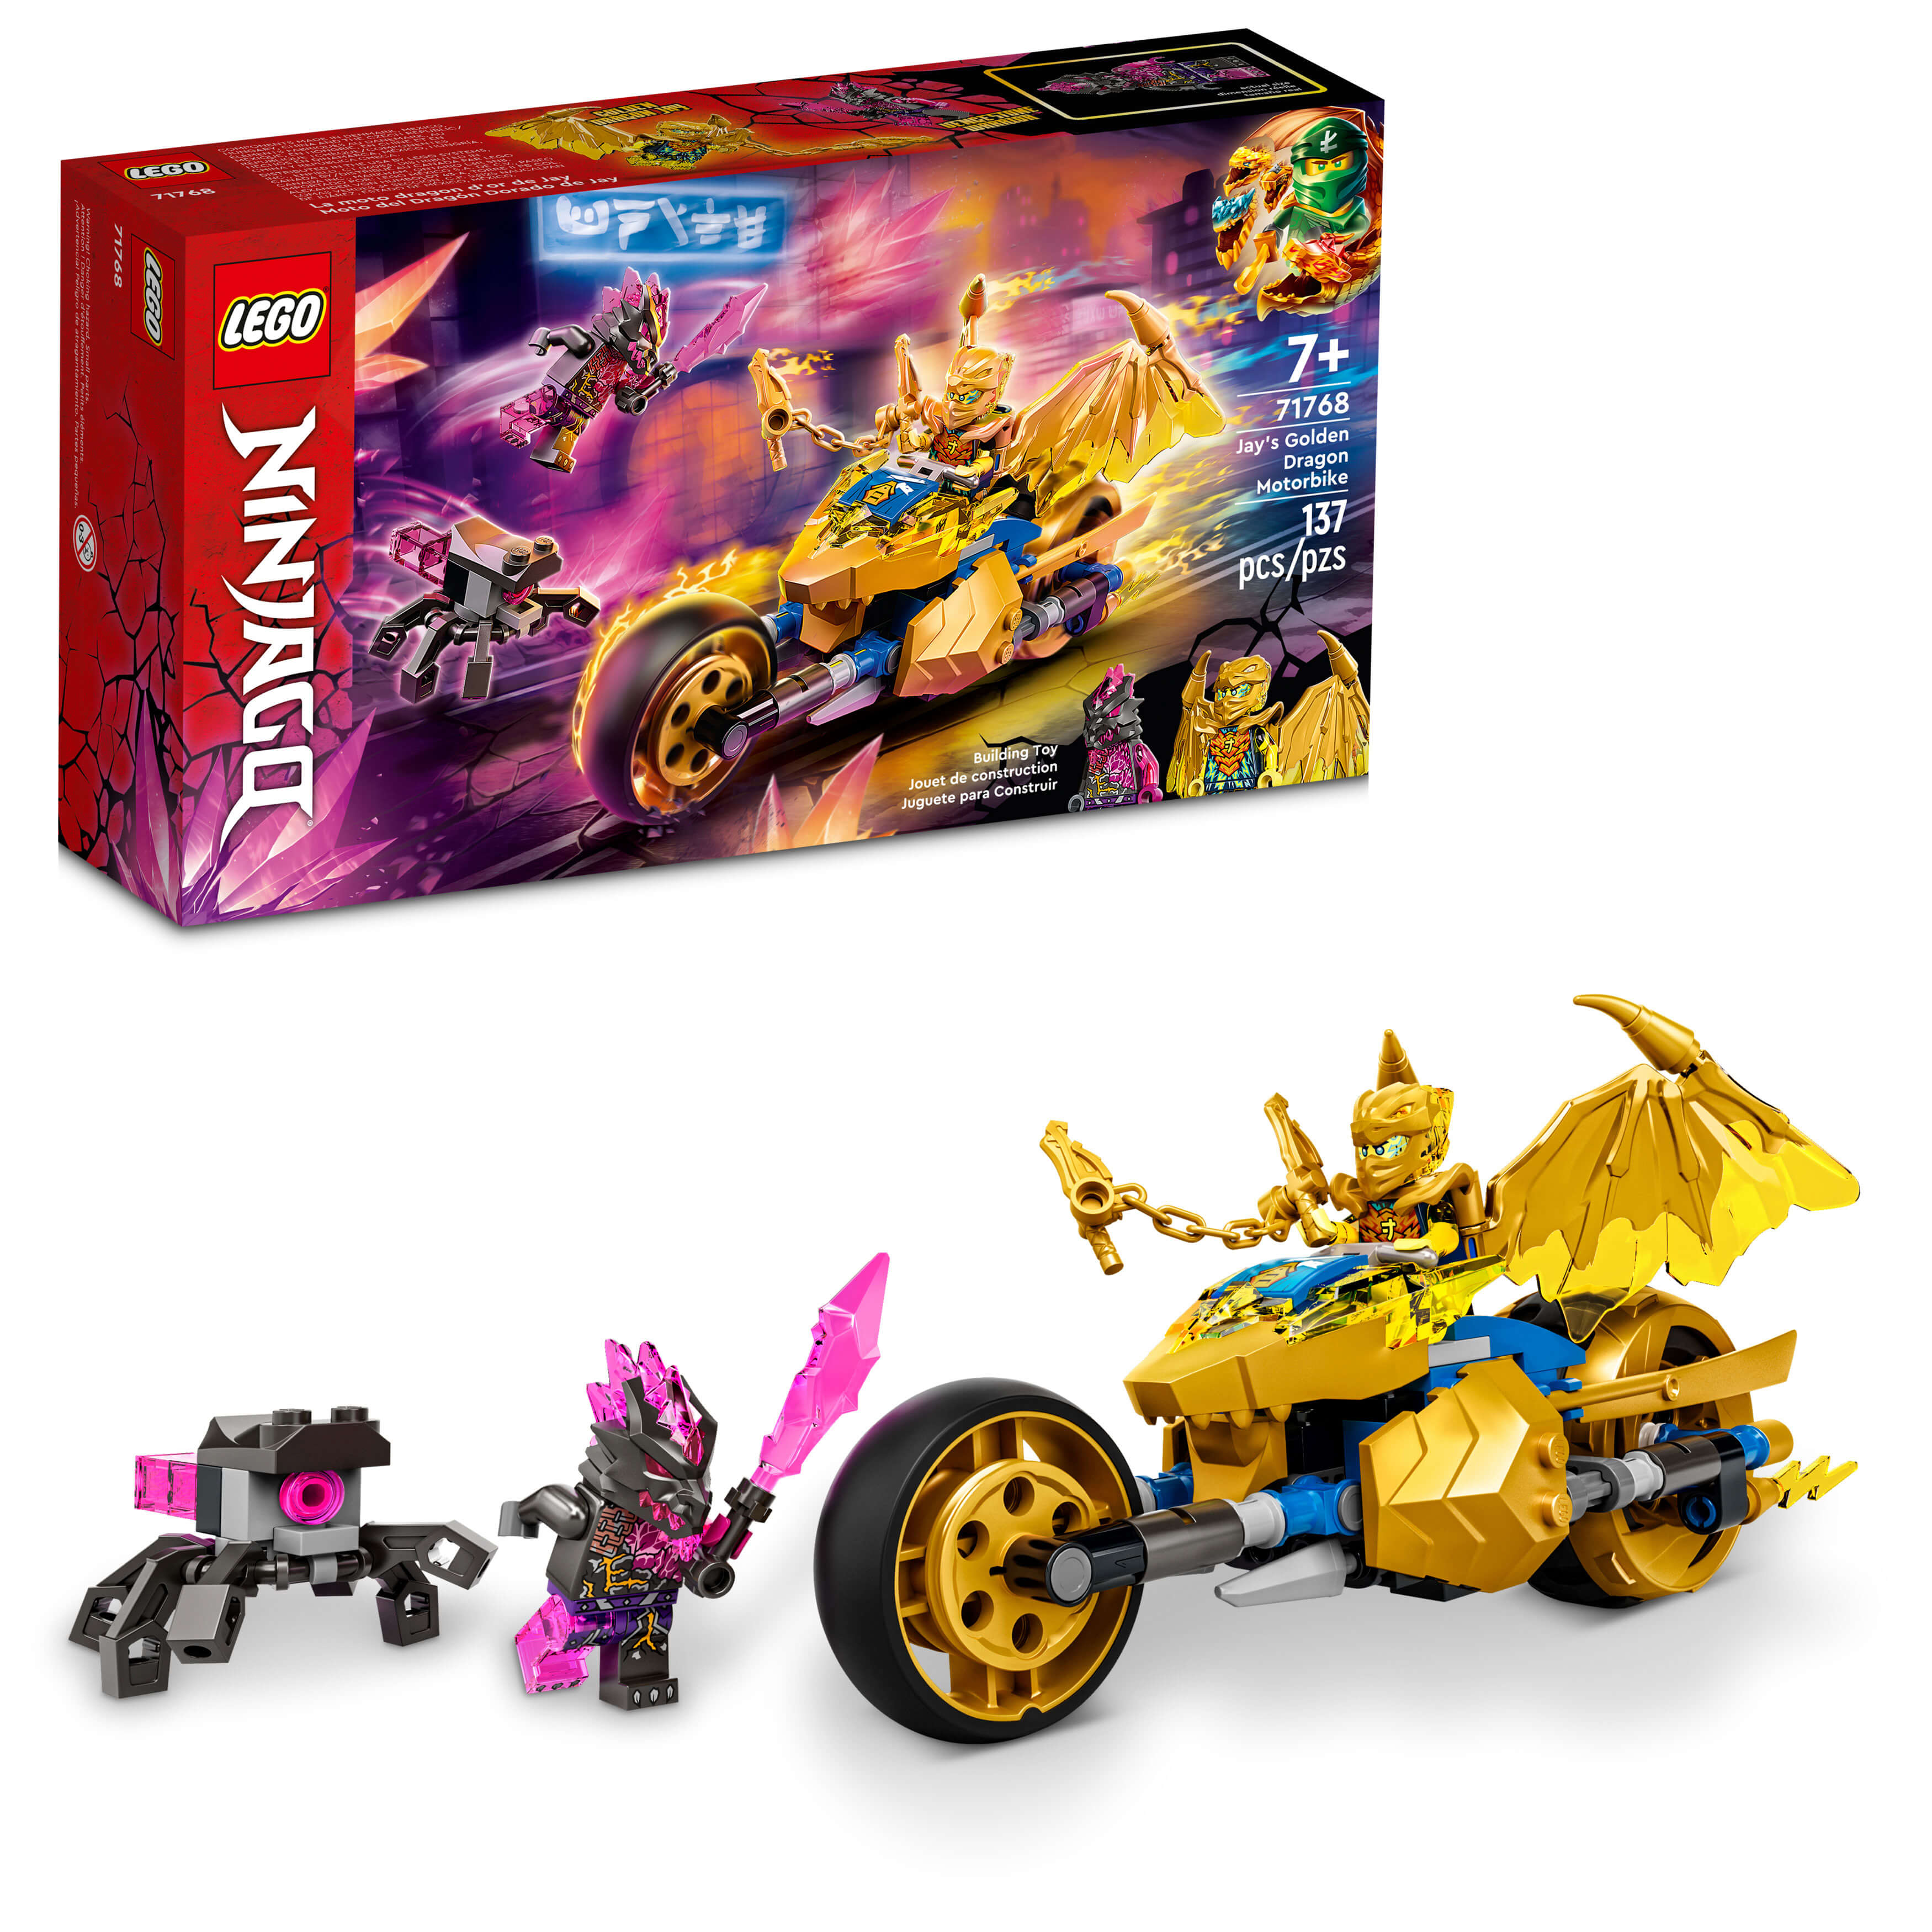 LEGO® NINJAGO Jays Golden Dragon Motorbike 71768 Building Kit (137 Pieces)